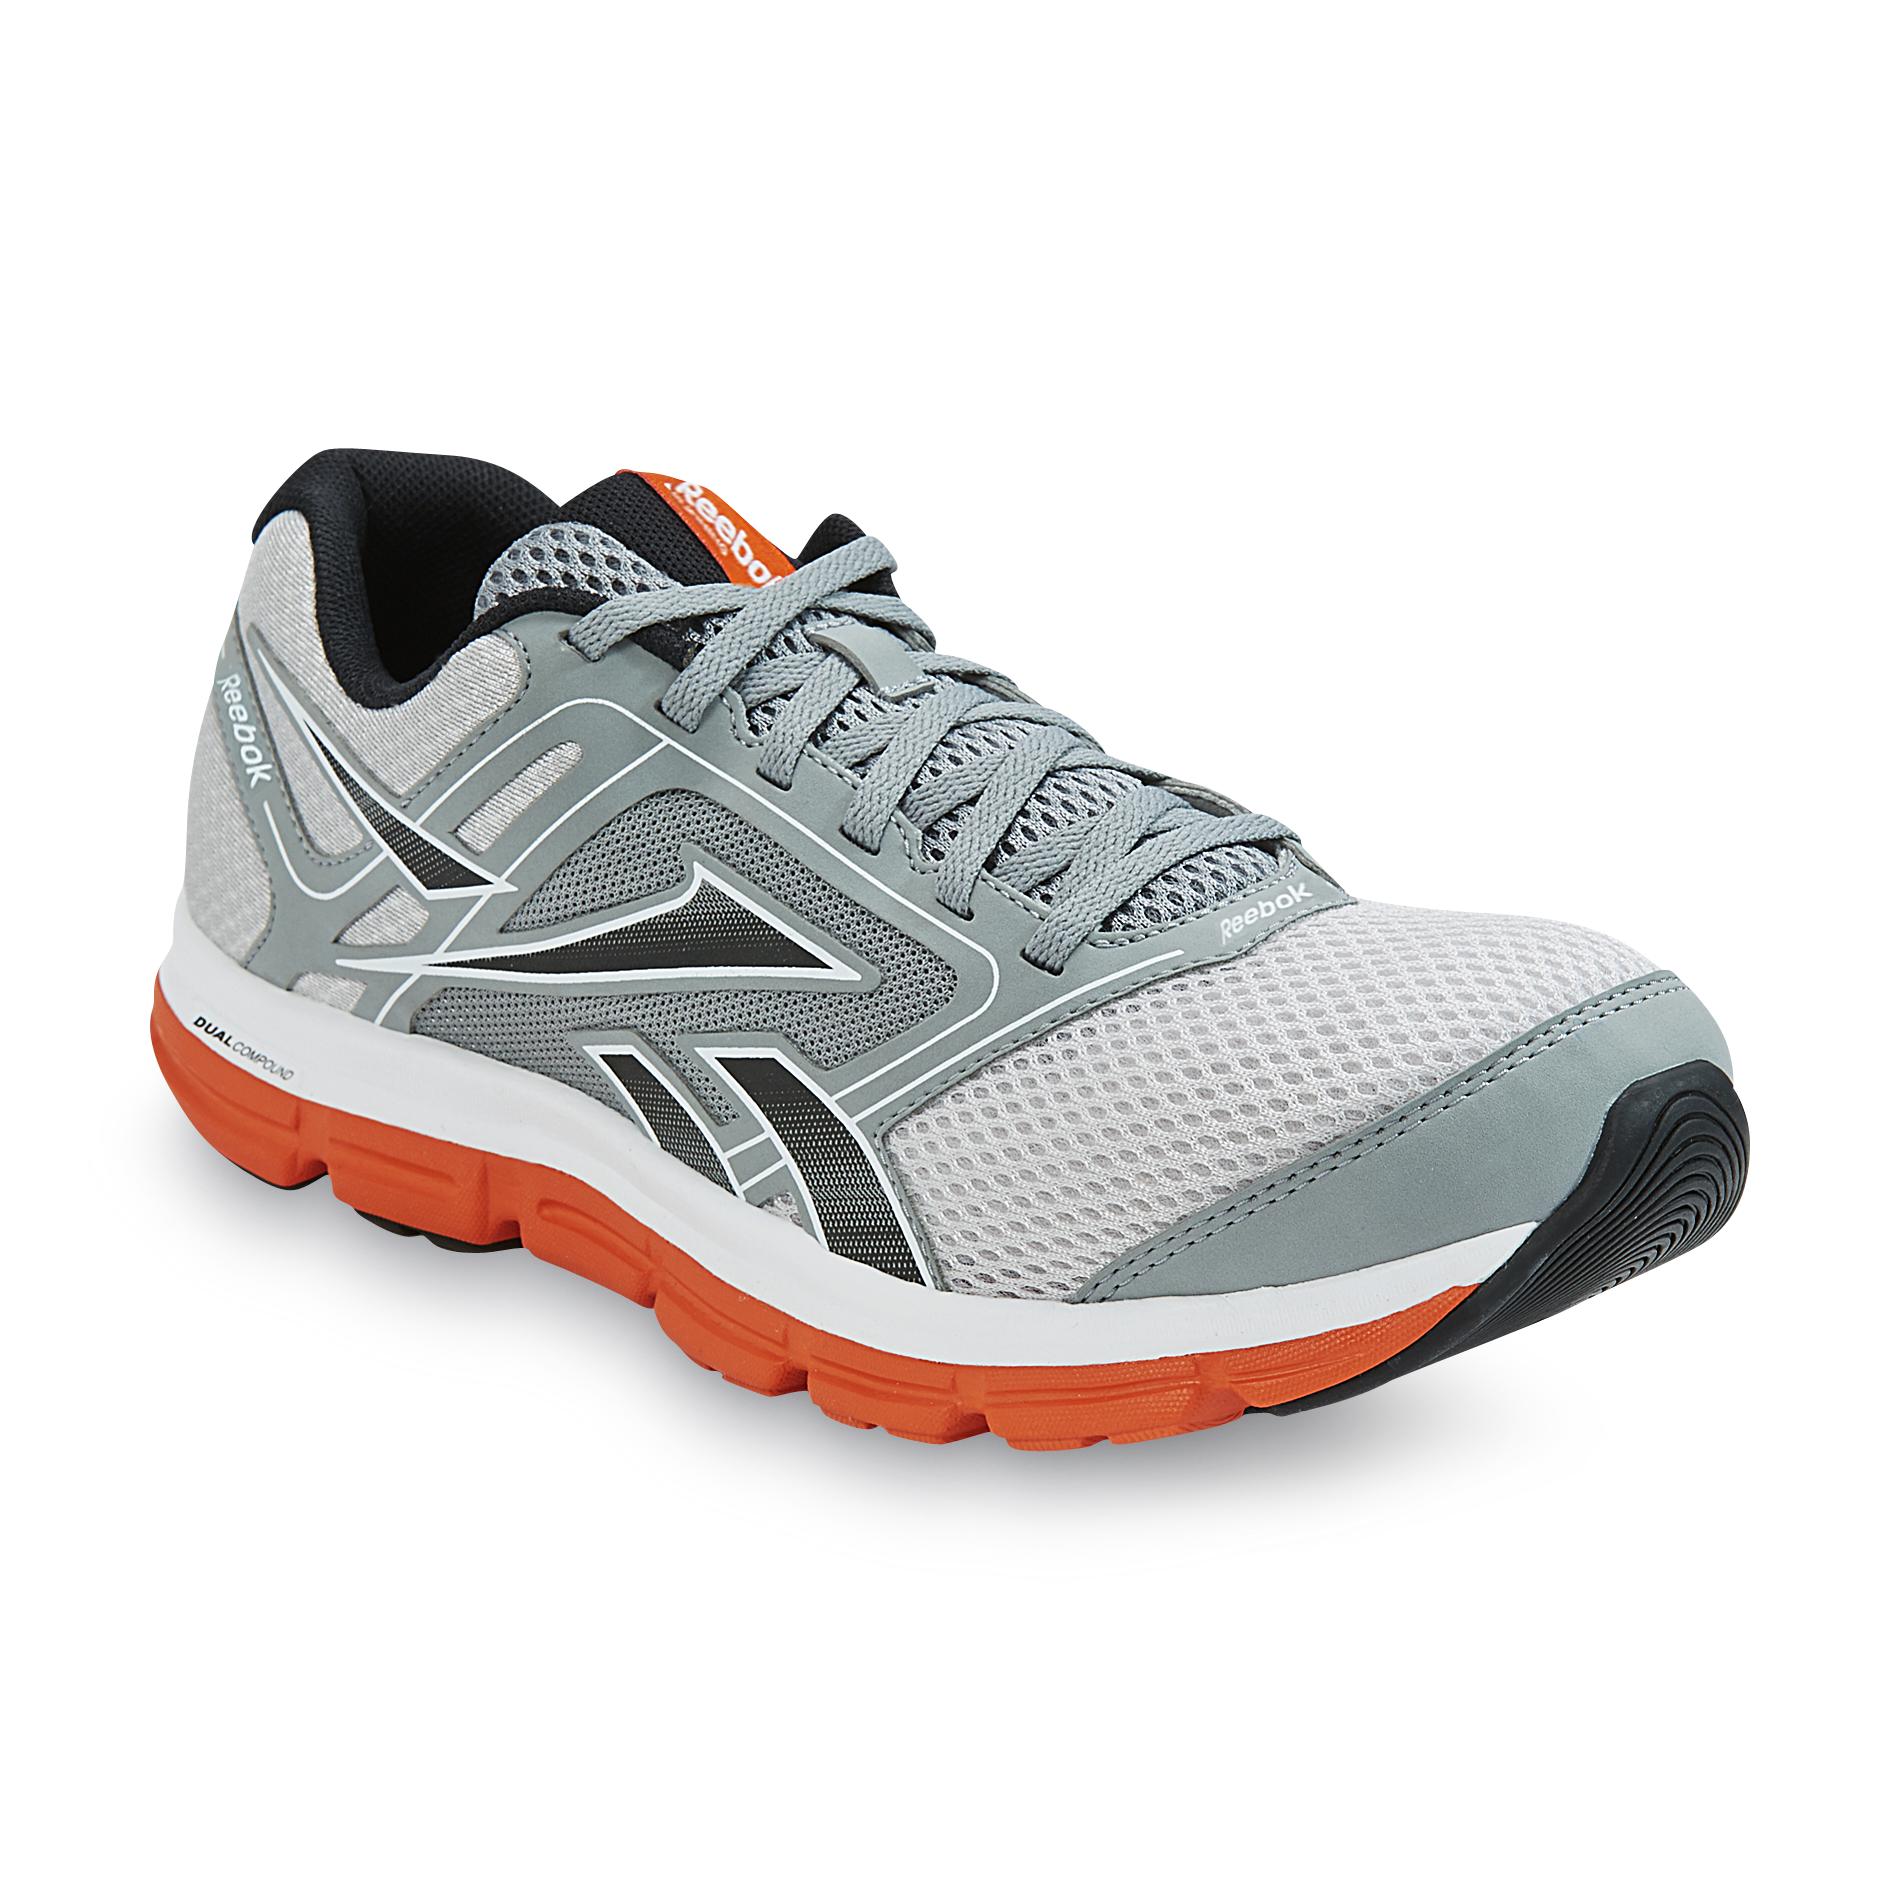 Reebok Men's Dual Turbo Fire Gray Running Athletic Shoe - Shoes - Men's ...